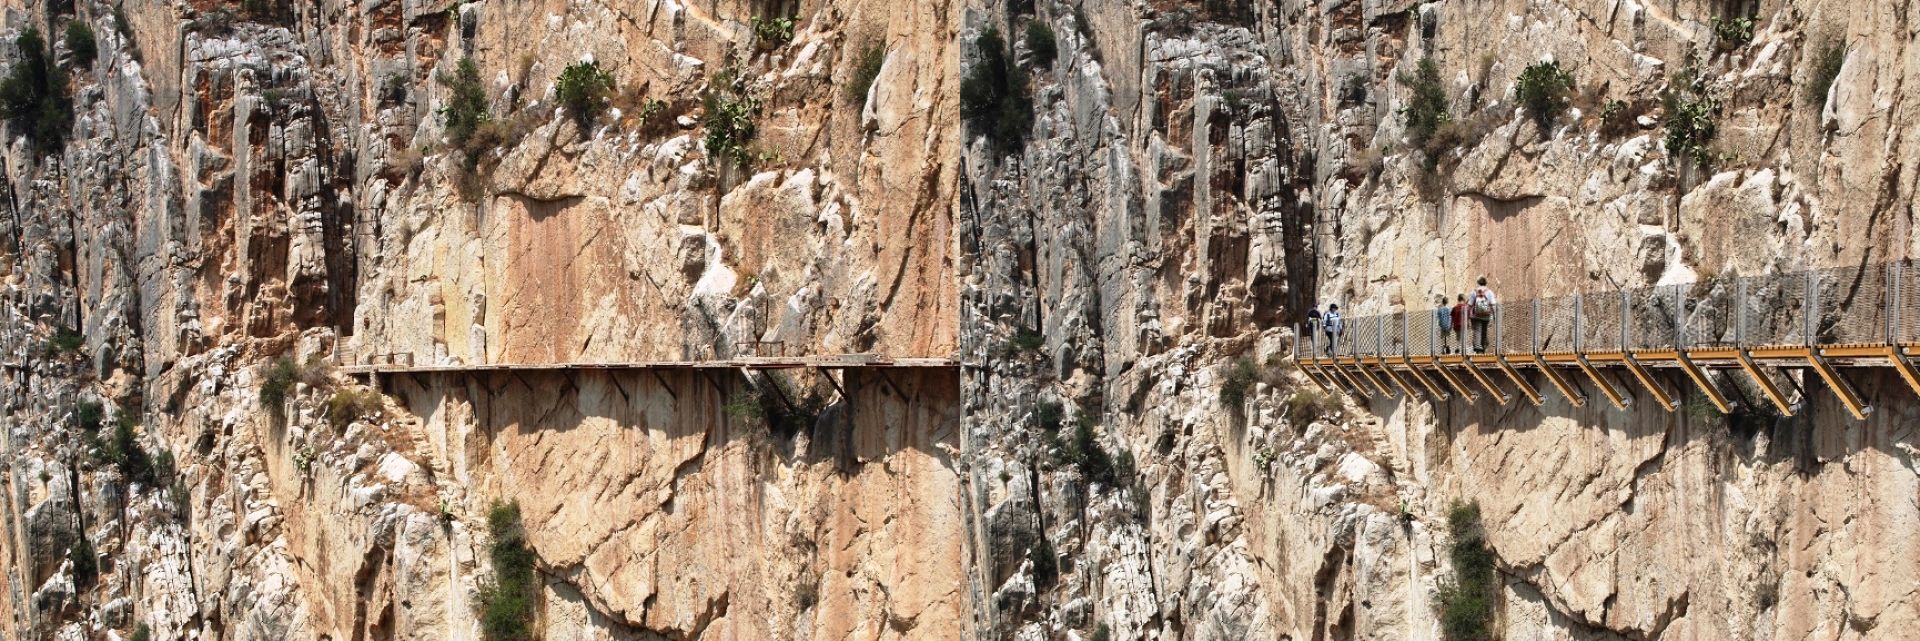 Королевская тропа (исп. El Caminito del Rey). Слева - существующее состояние маршрута. Справа - Проект реконструкци 